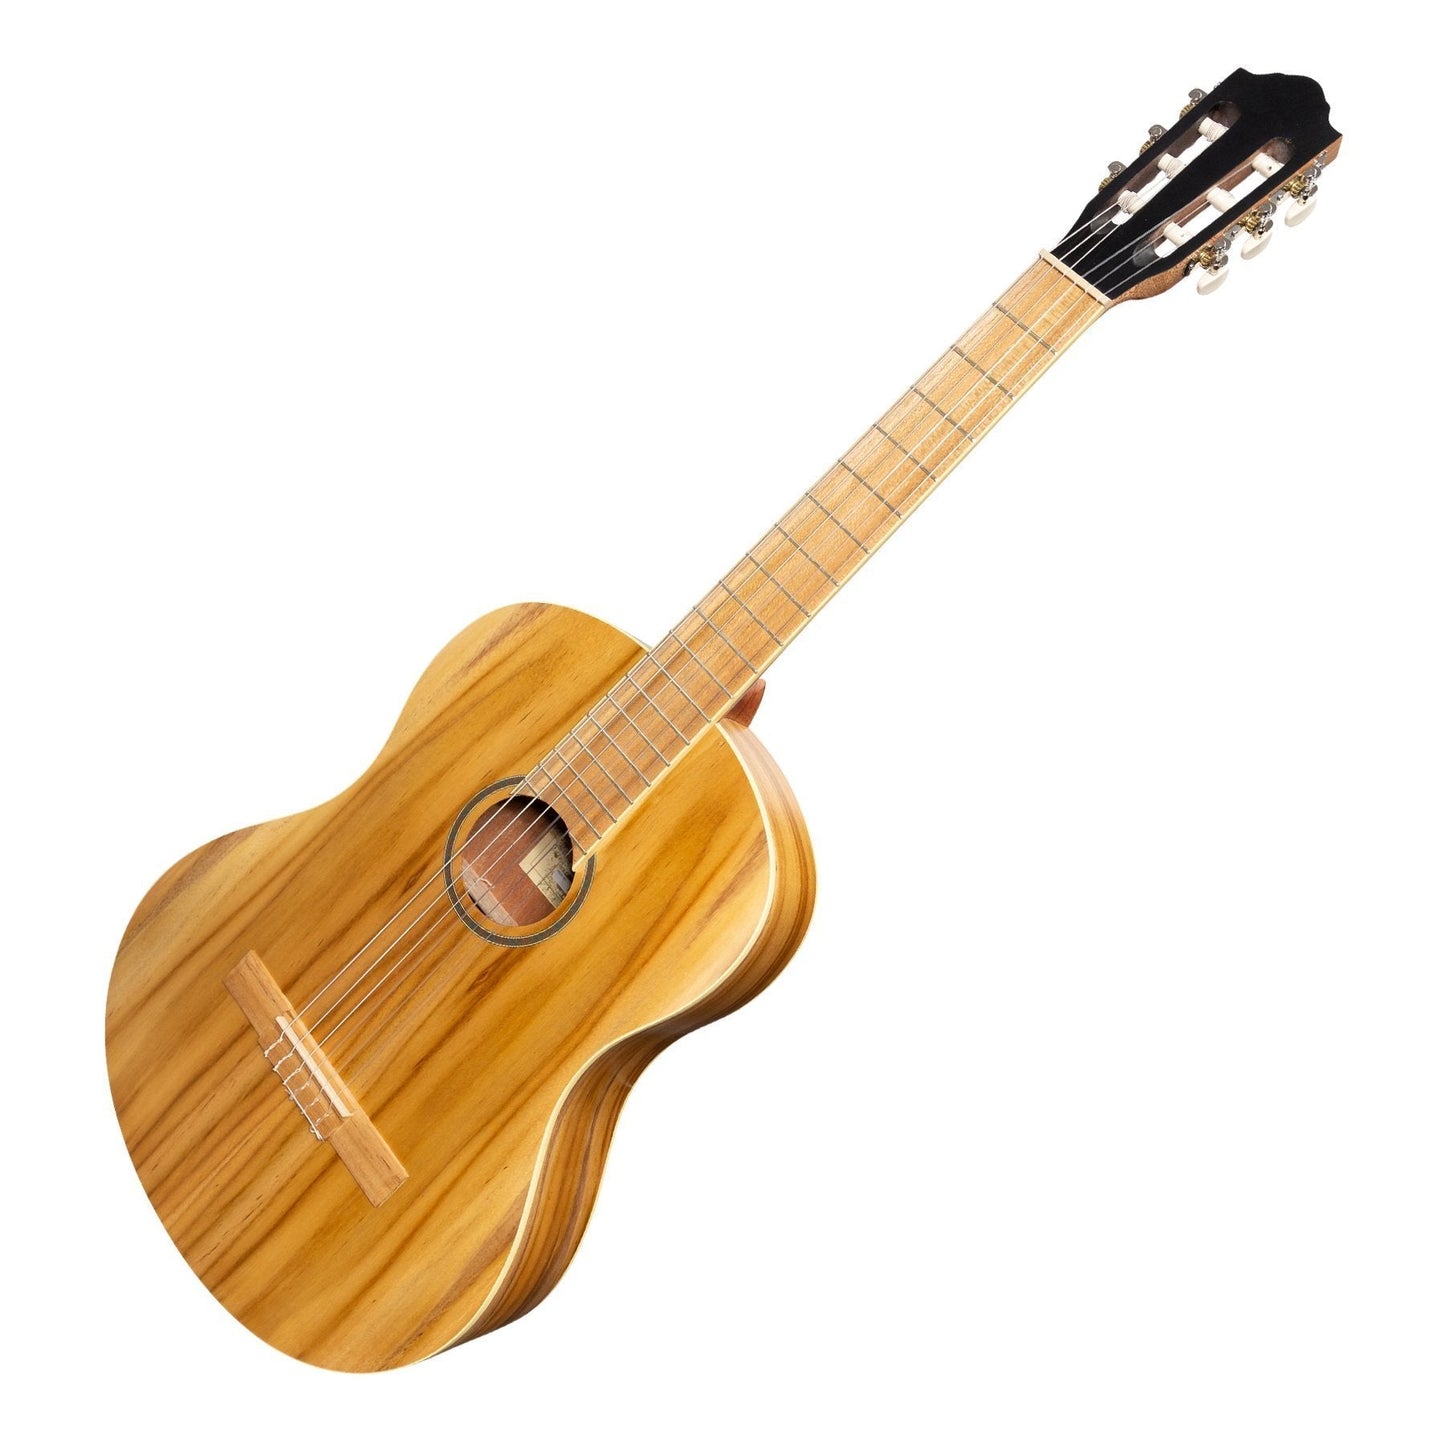 Martinez Full Size Student Classical Guitar with Built In Tuner (Jati-Teakwood)